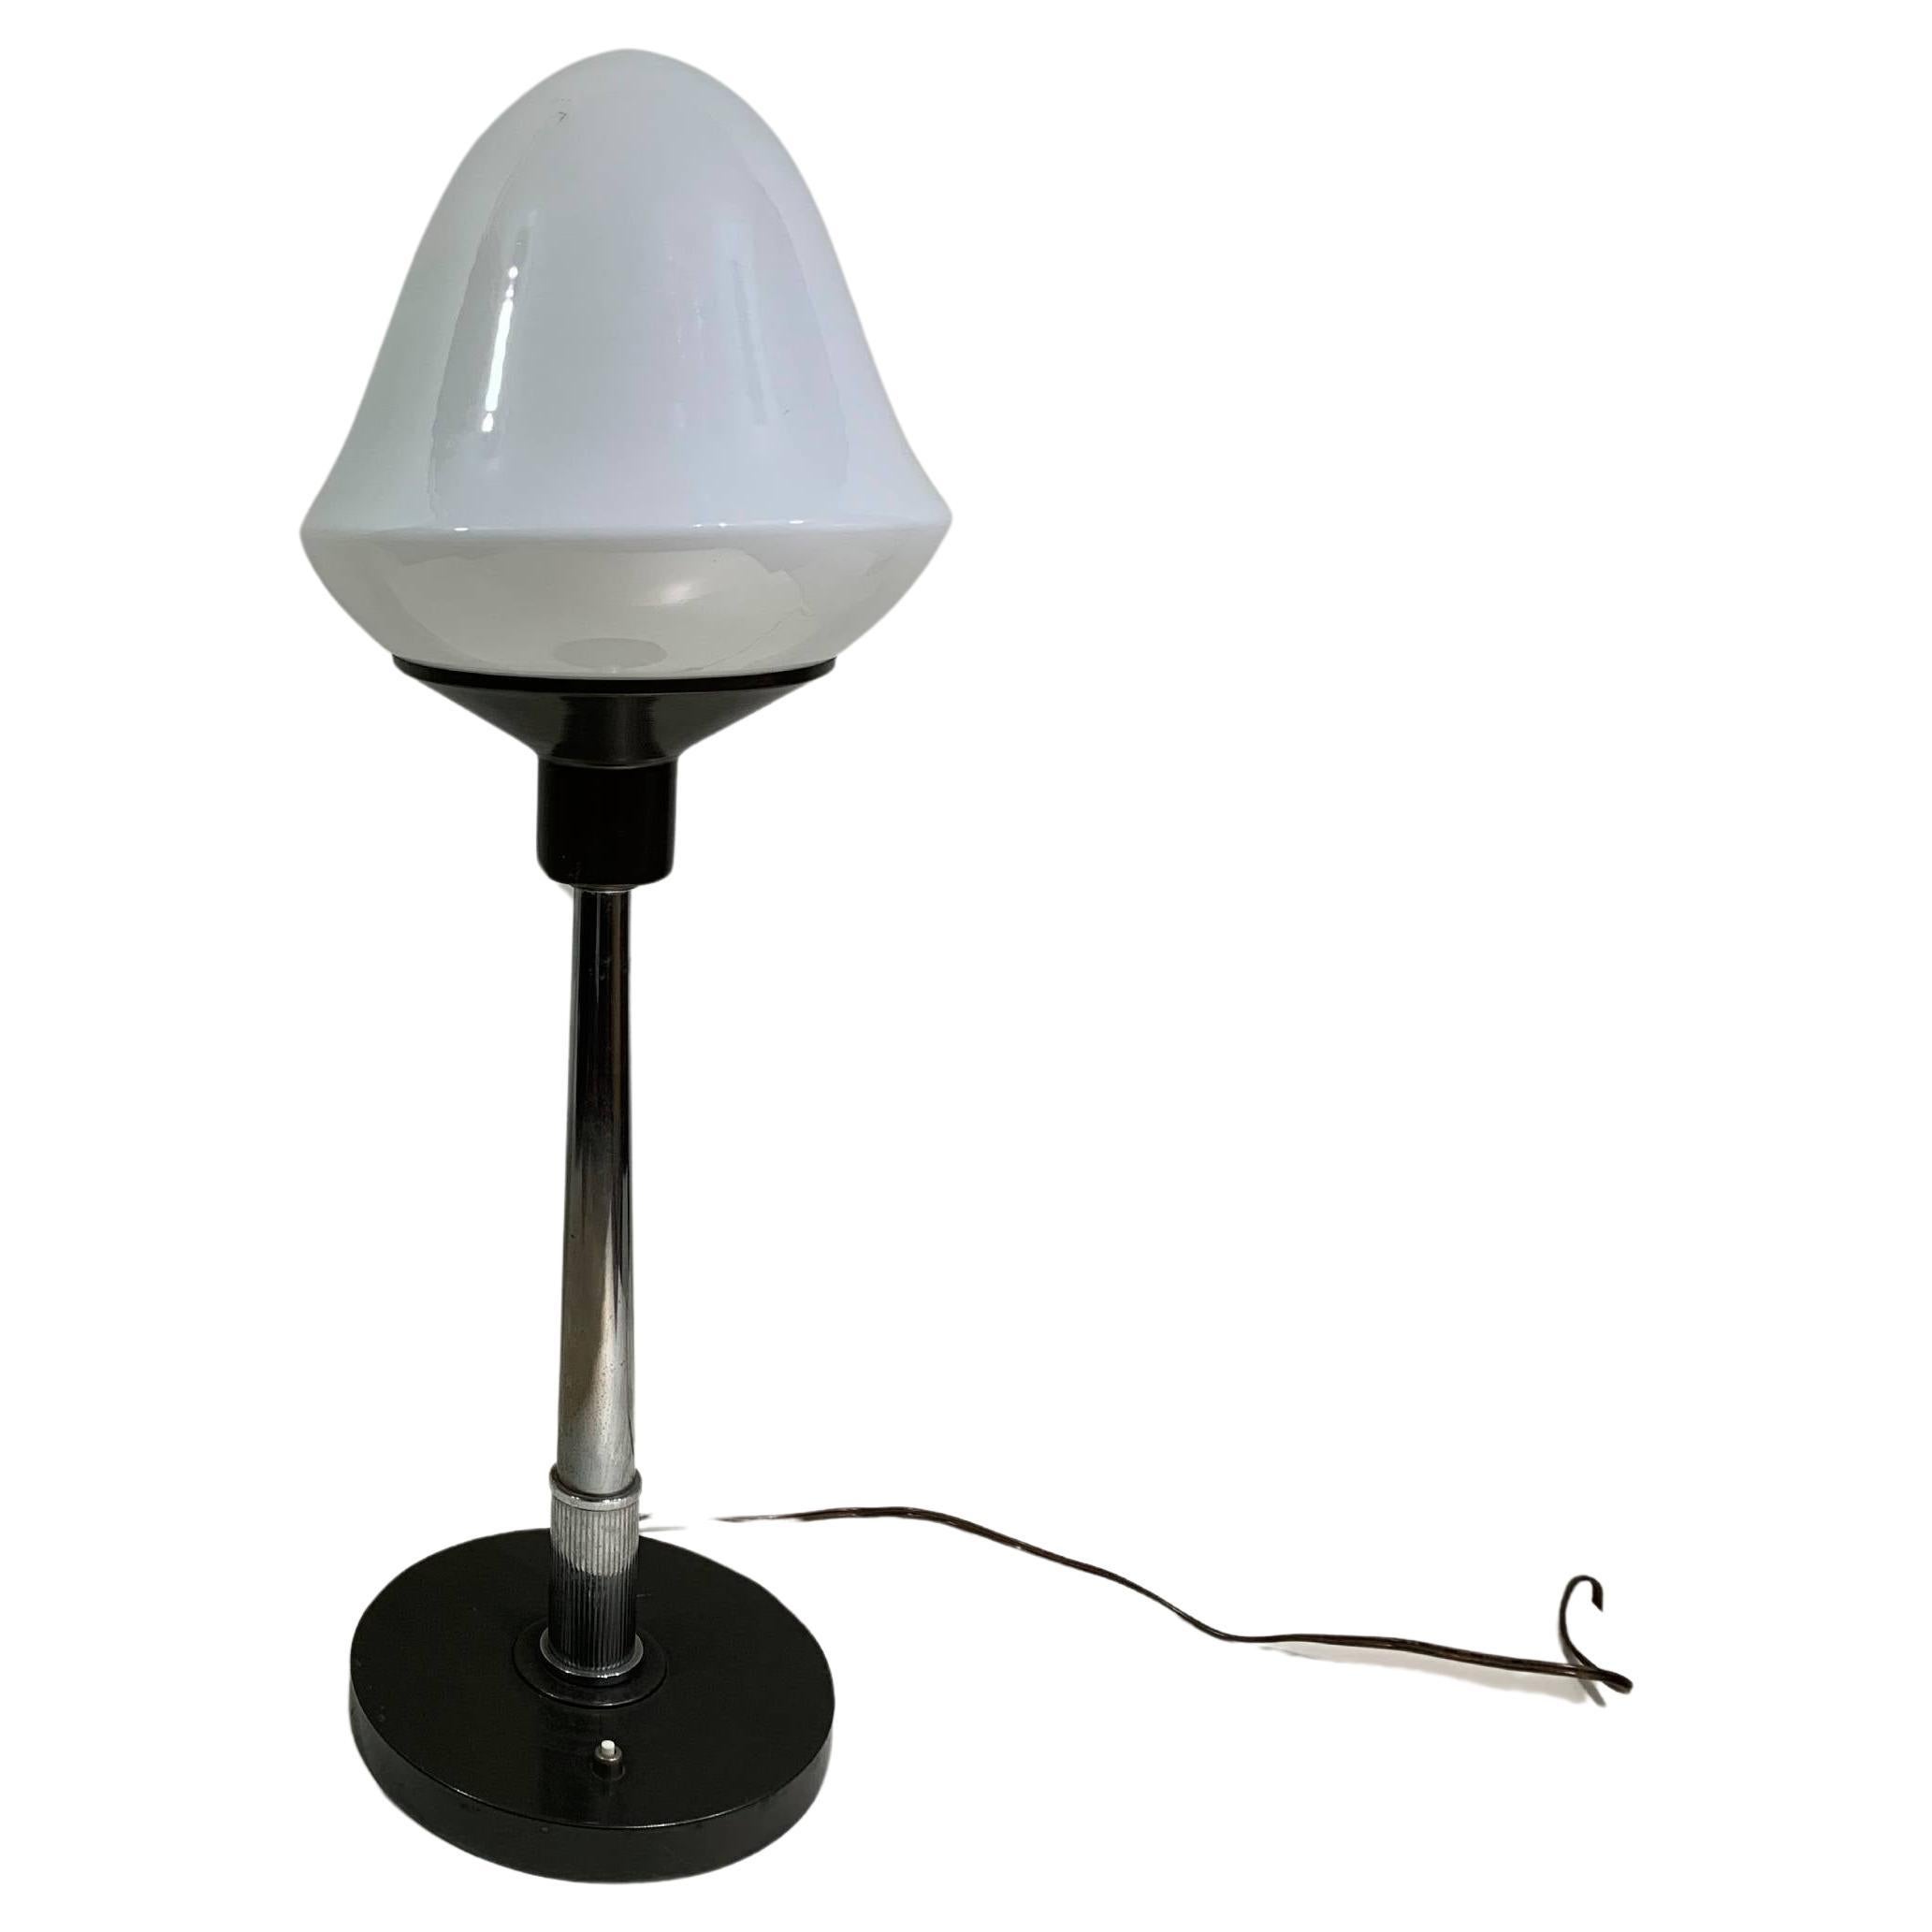 20th Century Vintage Table Lamp, Milk Glass Shade and Metallic Rod